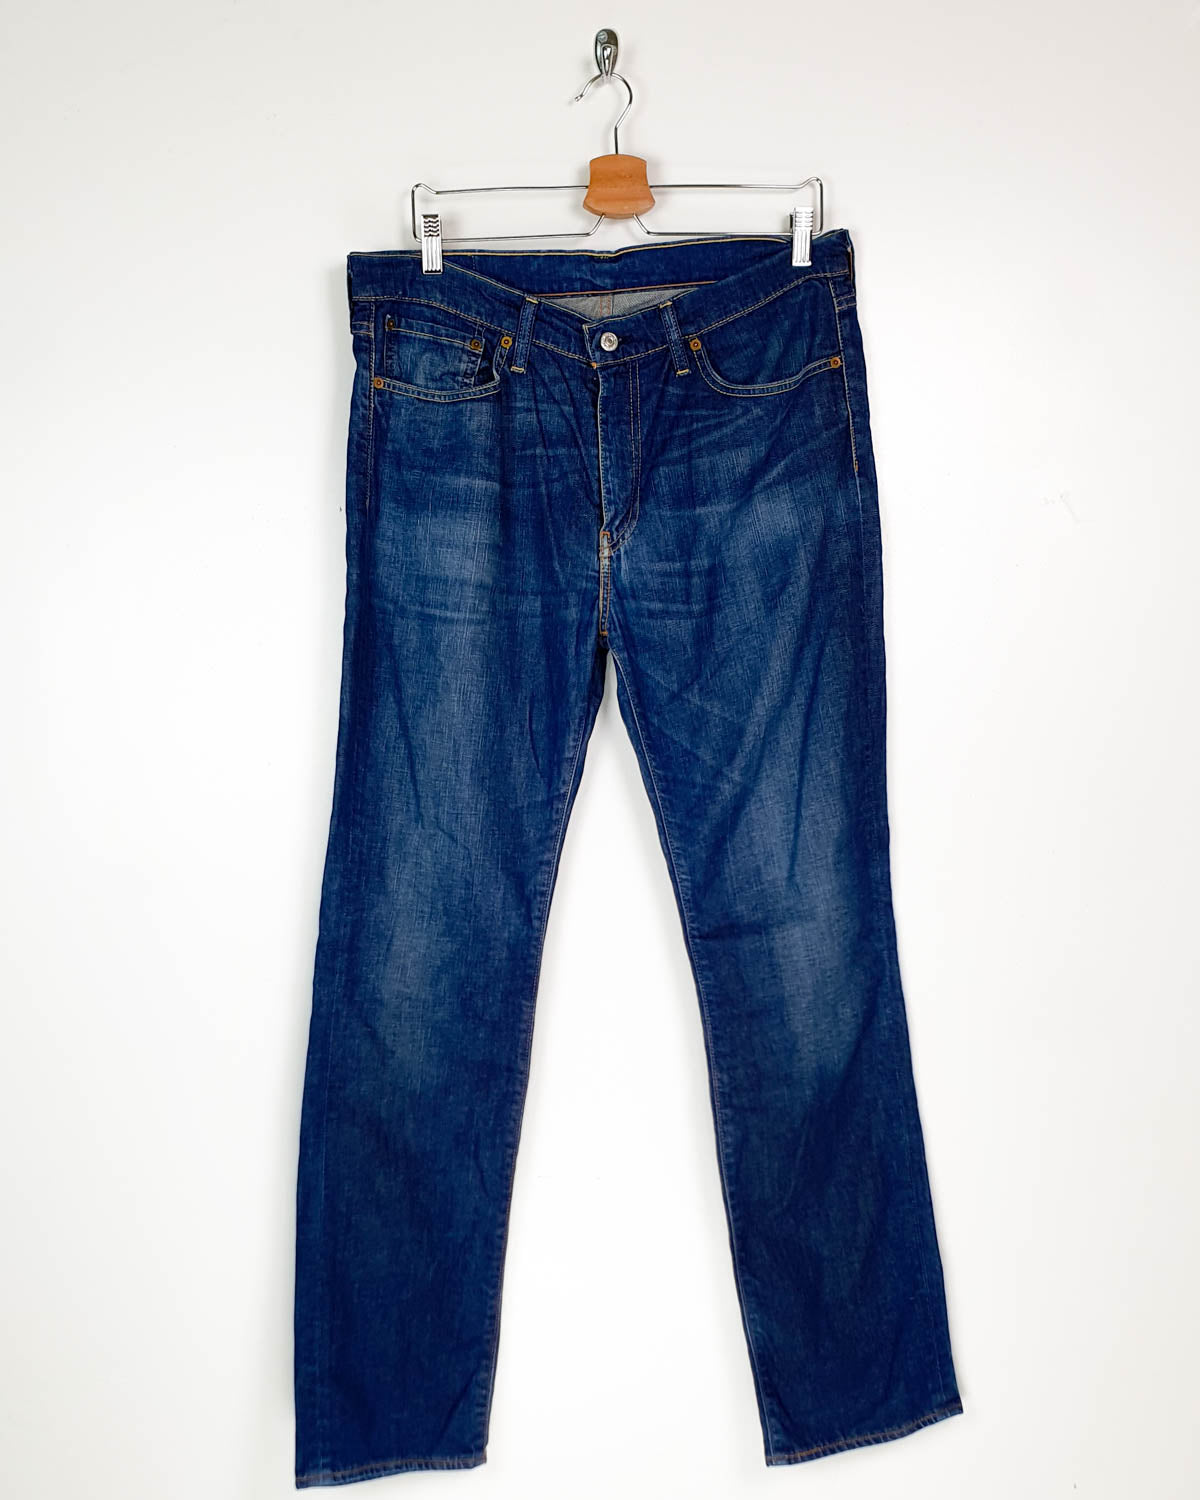 Levis - Jeans 511 Taglia 50